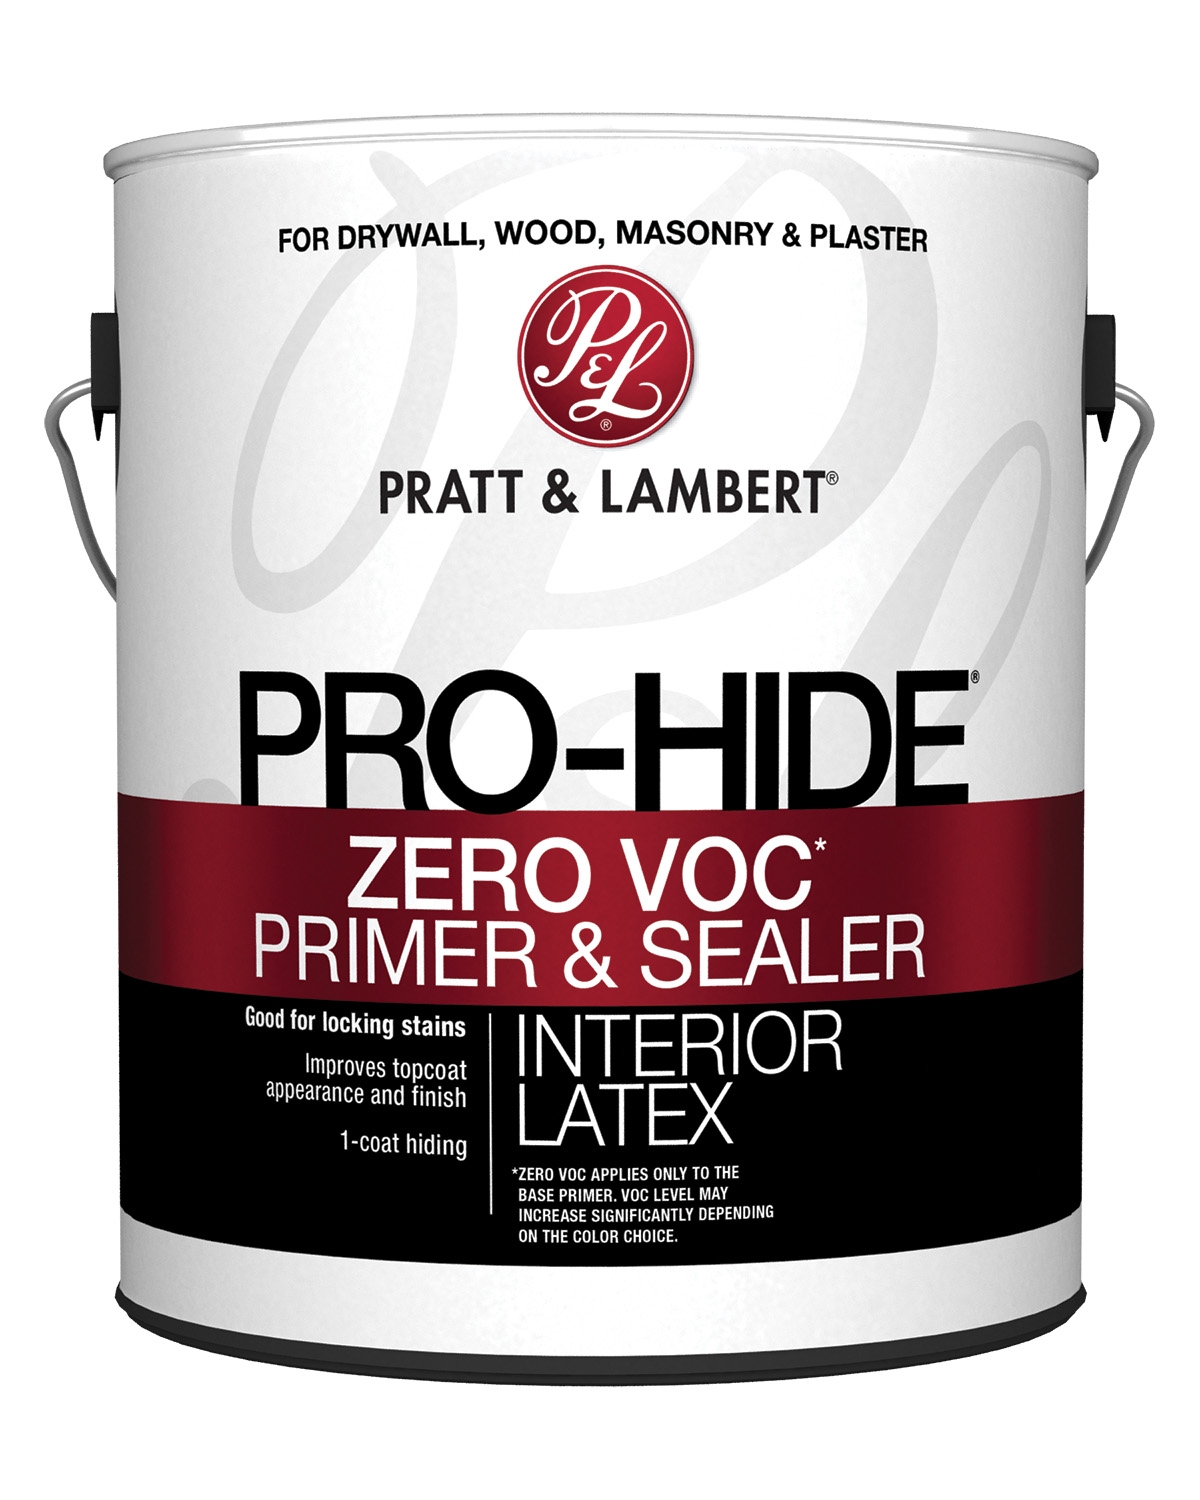 Pratt & Lambert Pro-Hide Zero VOC Primer & Sealer